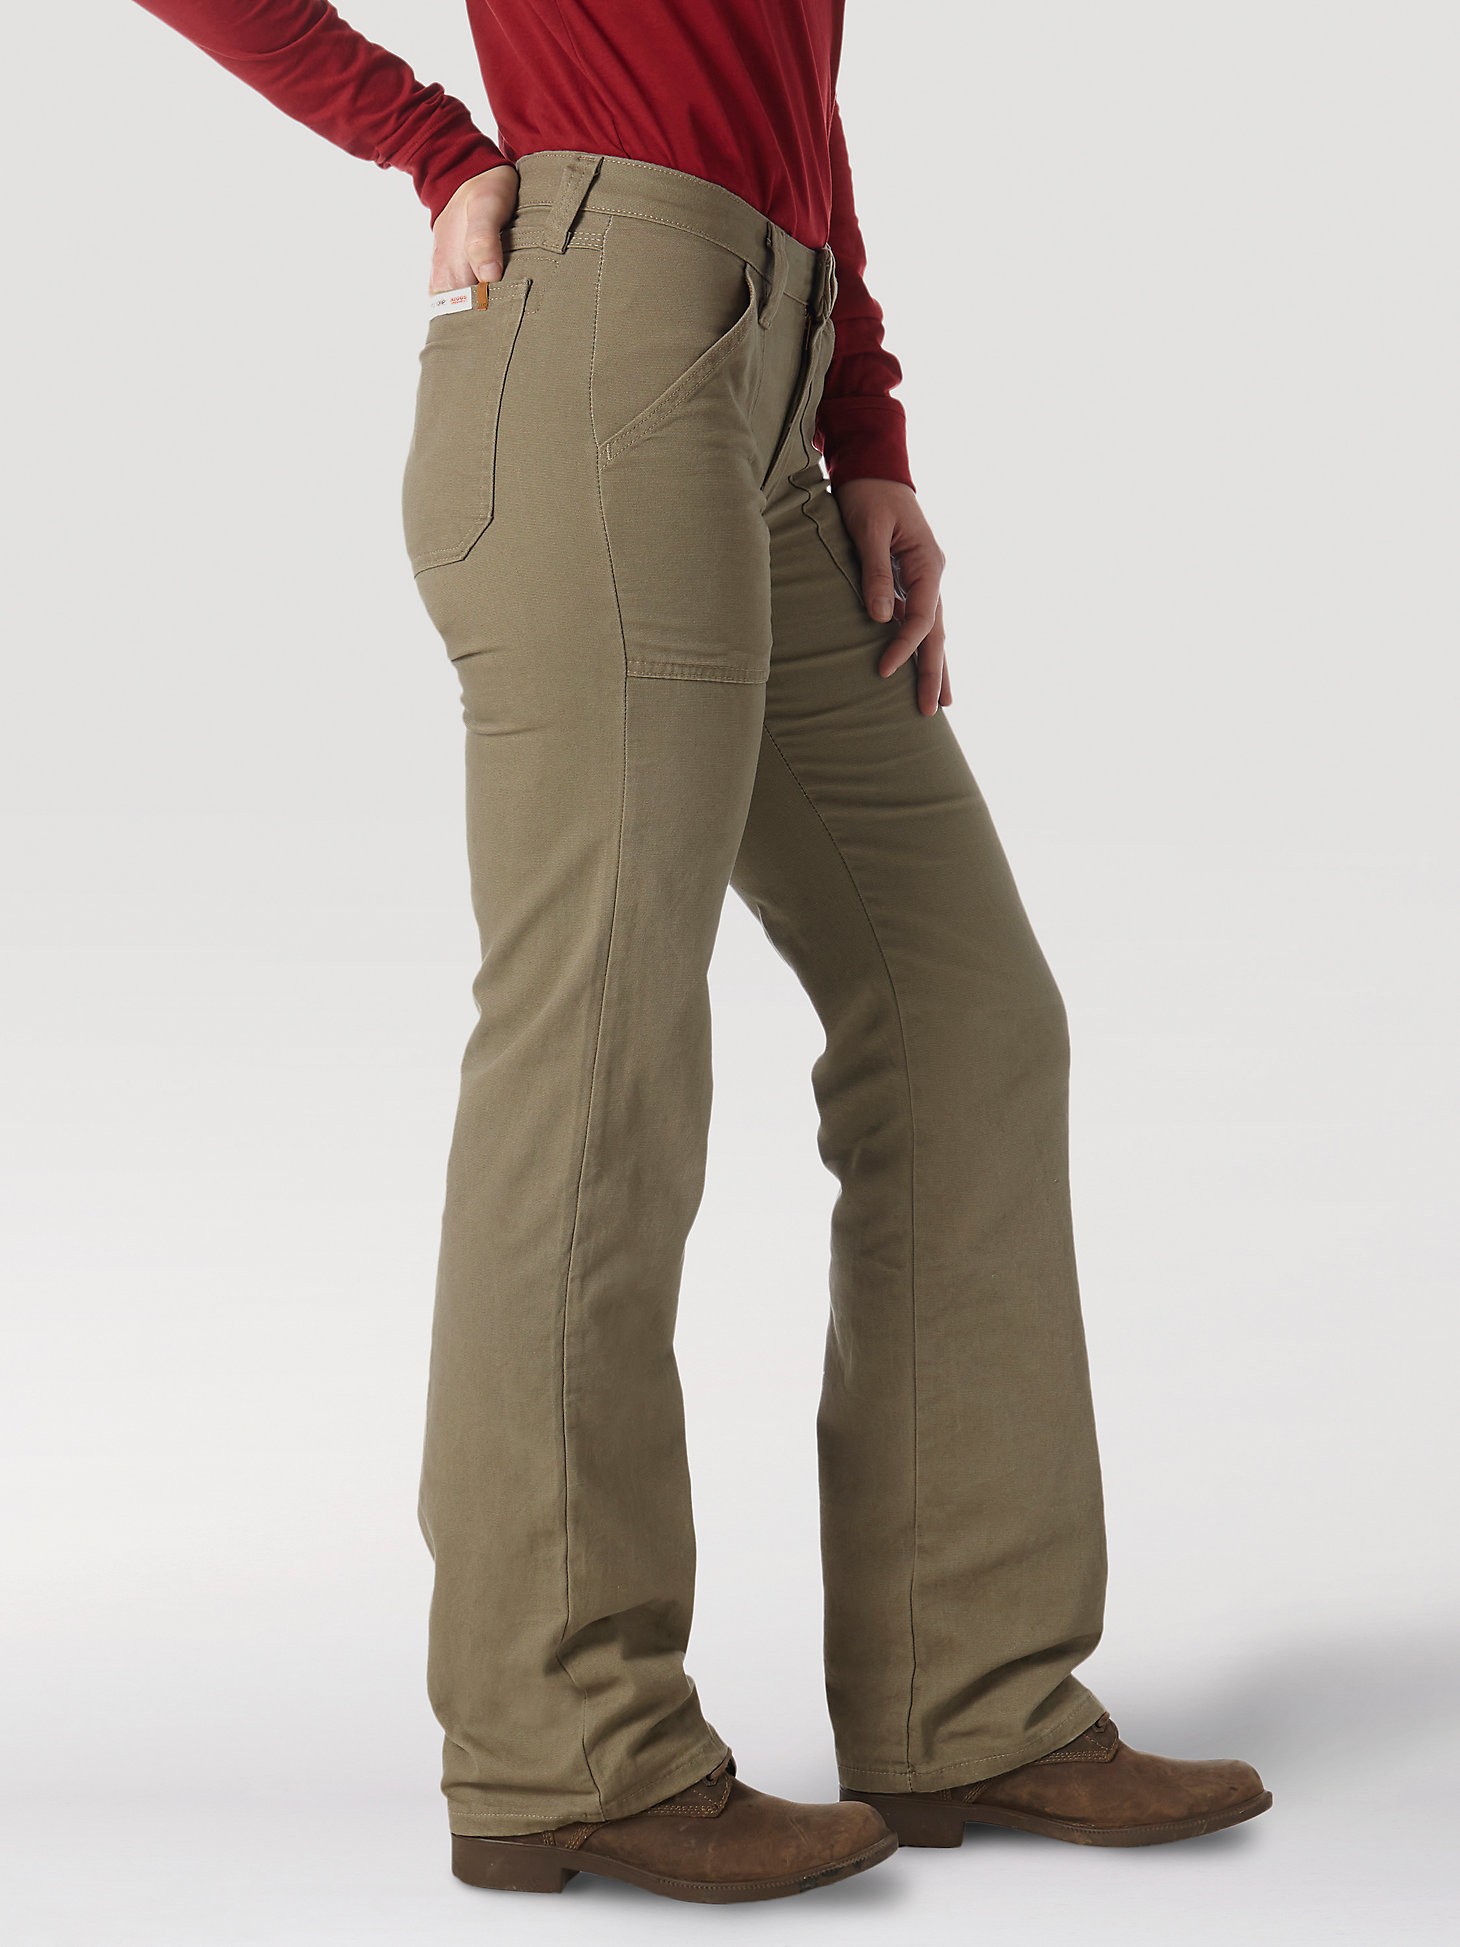 Women's Wrangler® RIGGS Workwear® Advanced Comfort Work Pant in Bark alternative view 1